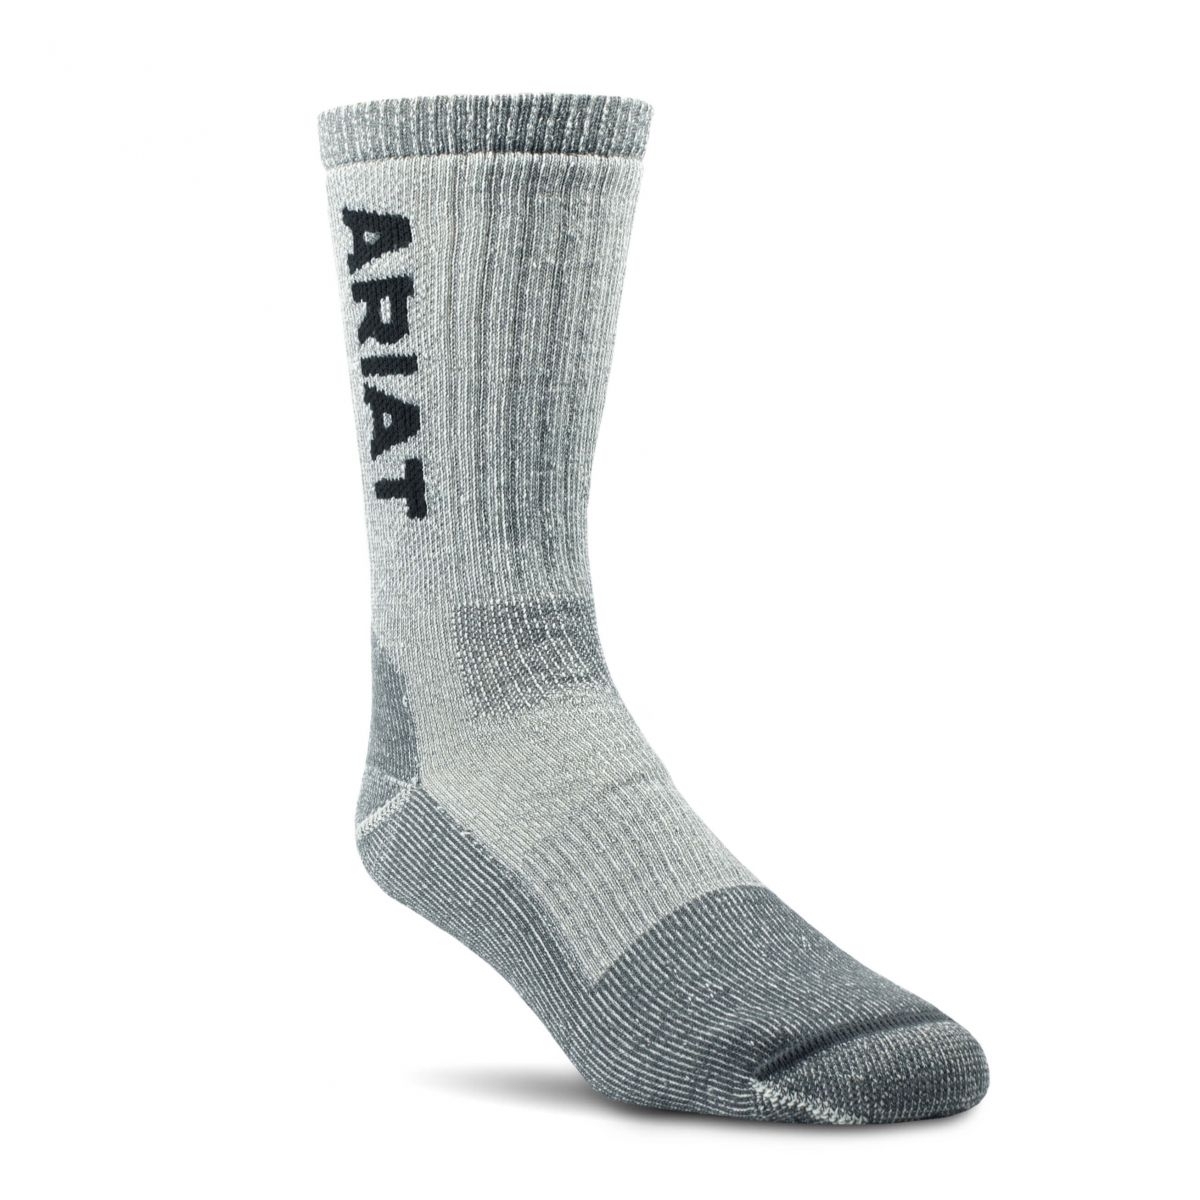 ARIAT Unisex Midweight Merino Wool Blend Steel Toe Work Socks Grey - AR2187-050 Grey - Grey, X-Large